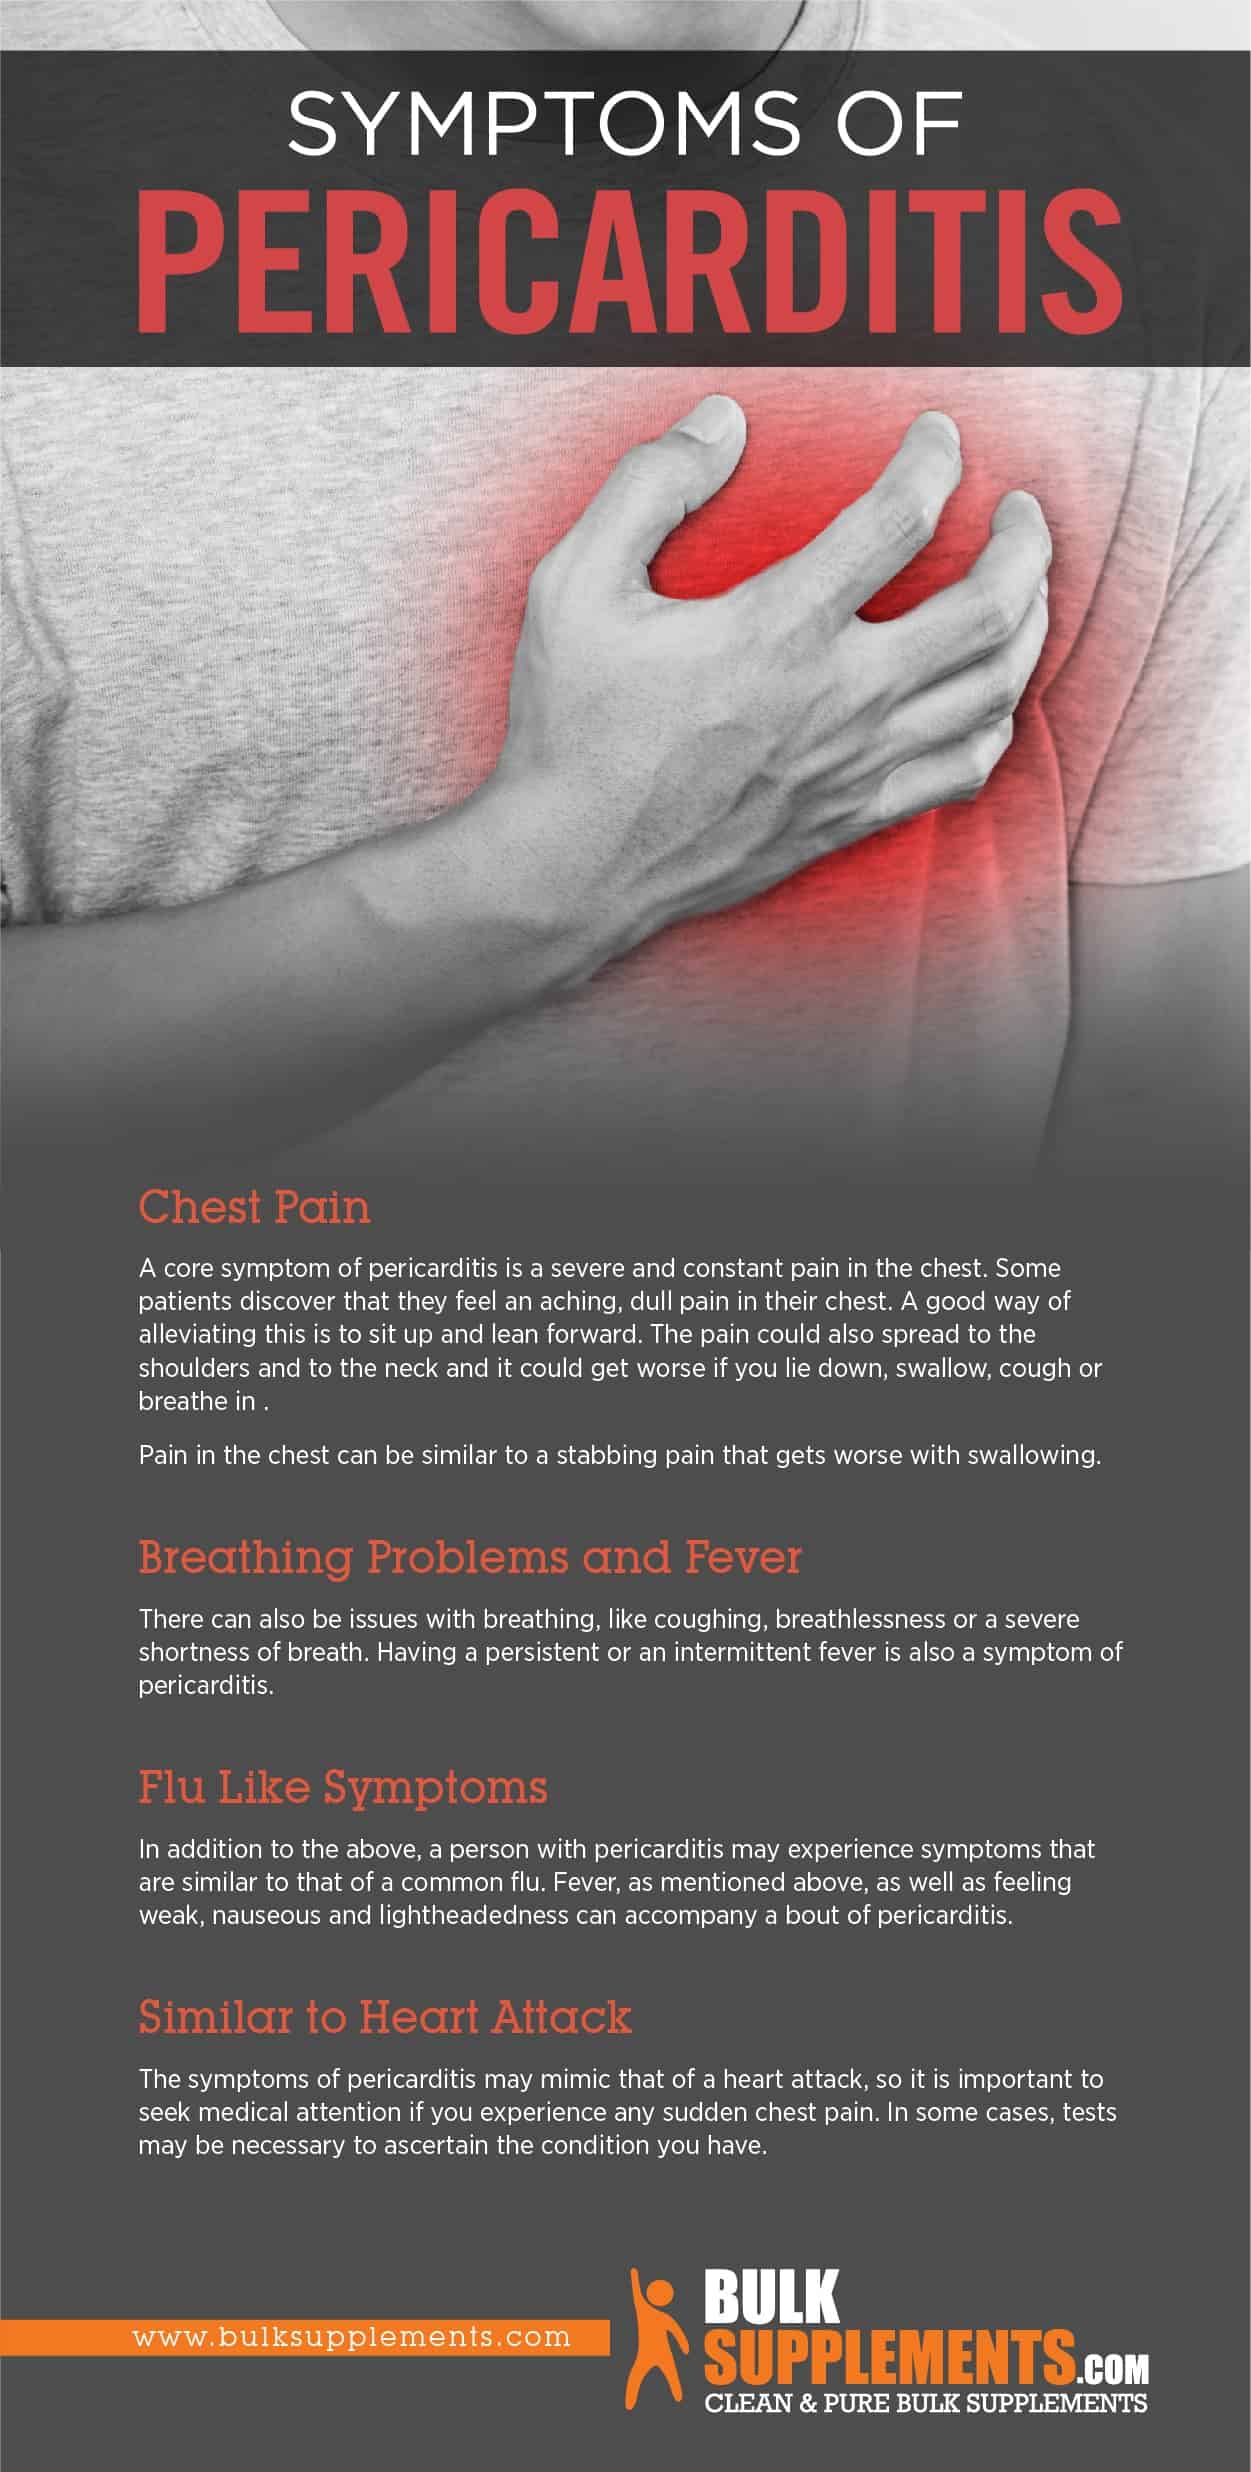 Symptoms of Pericarditis